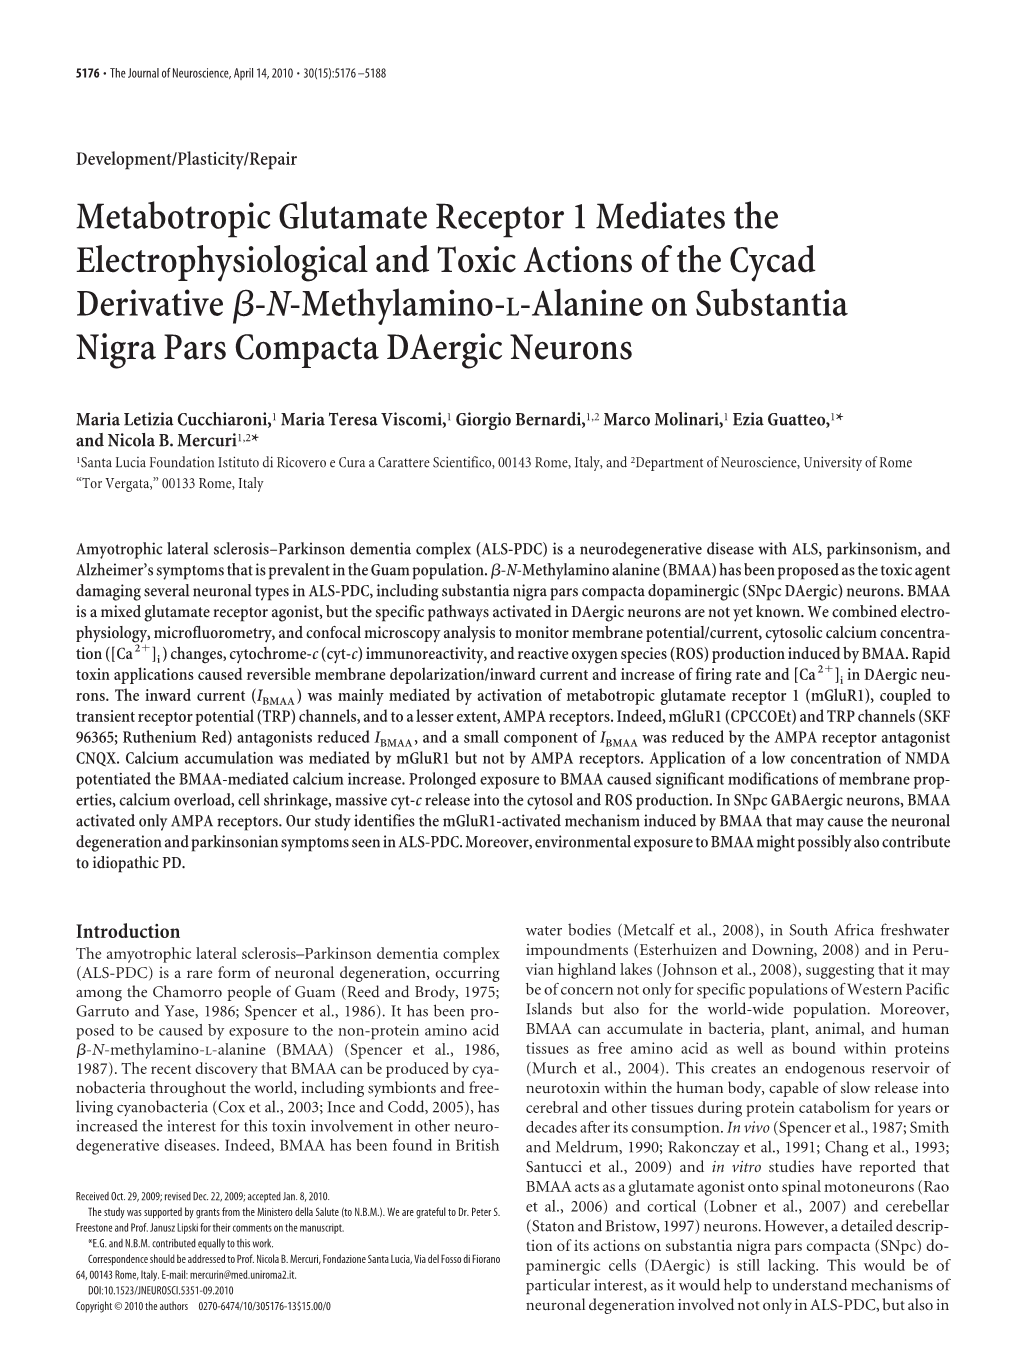 Metabotropic Glutamate Receptor 1 Mediates